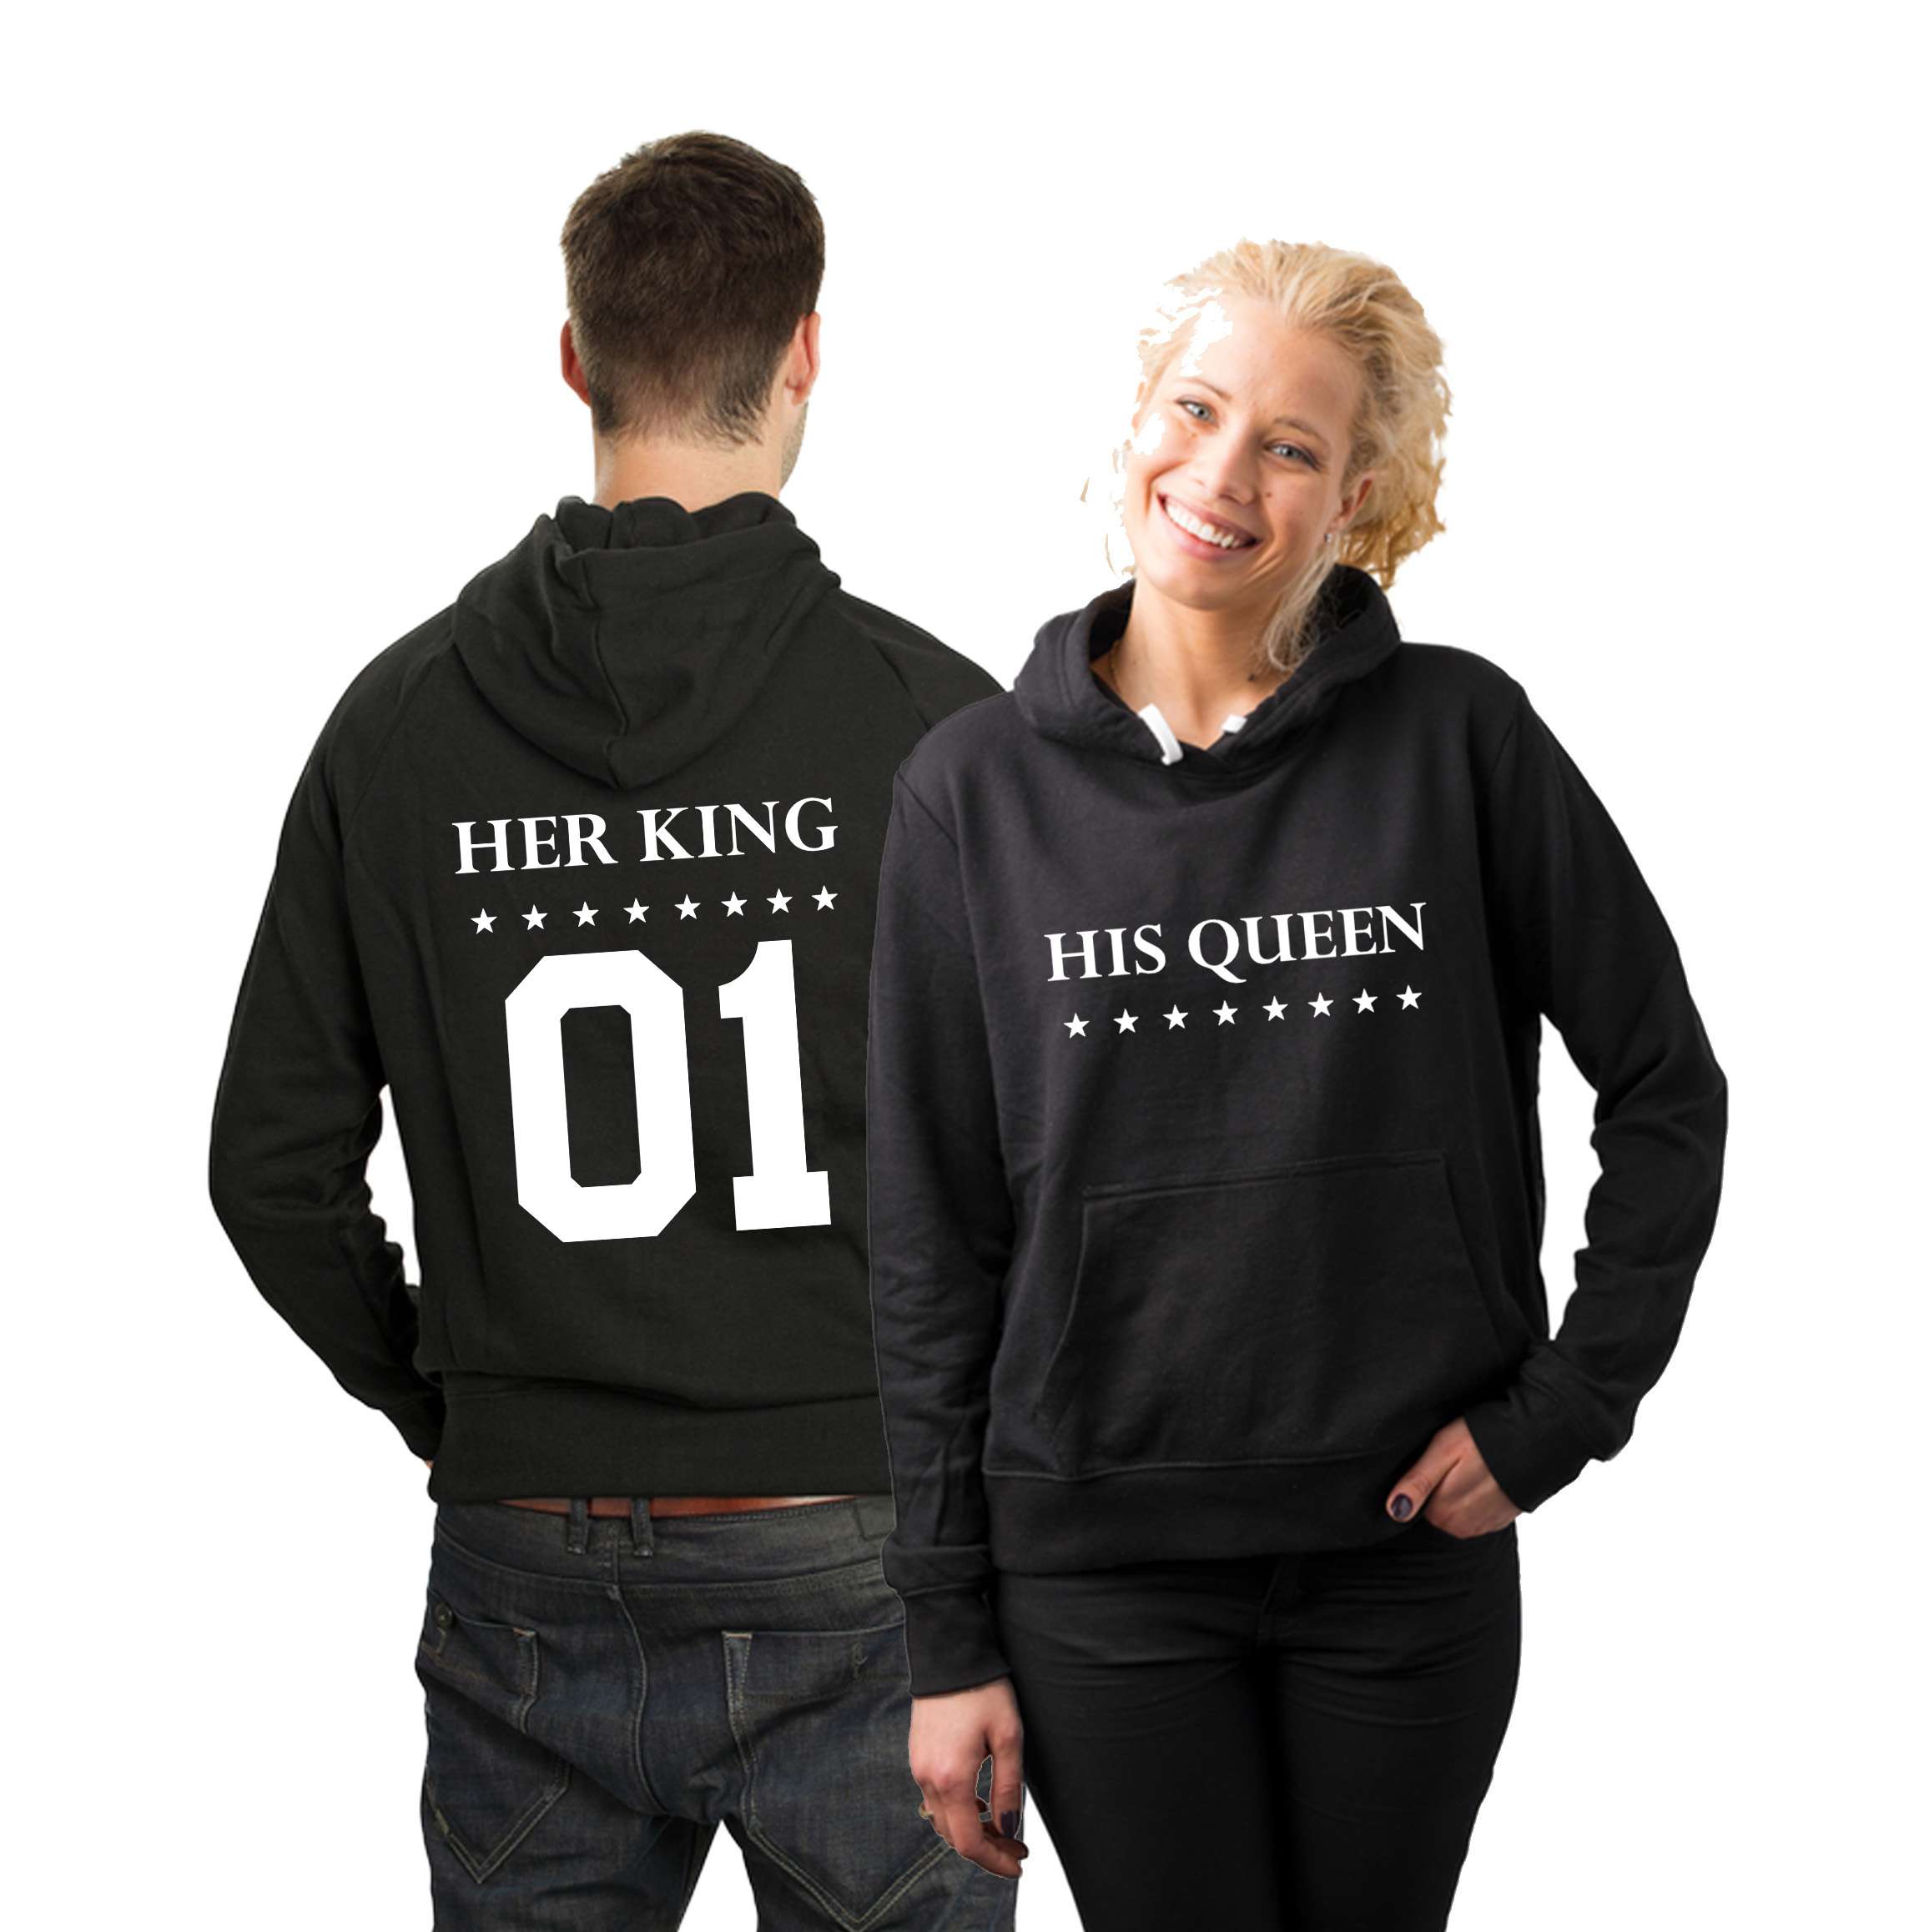 Her King His Queen Hoodies Matching Couples Hoodies